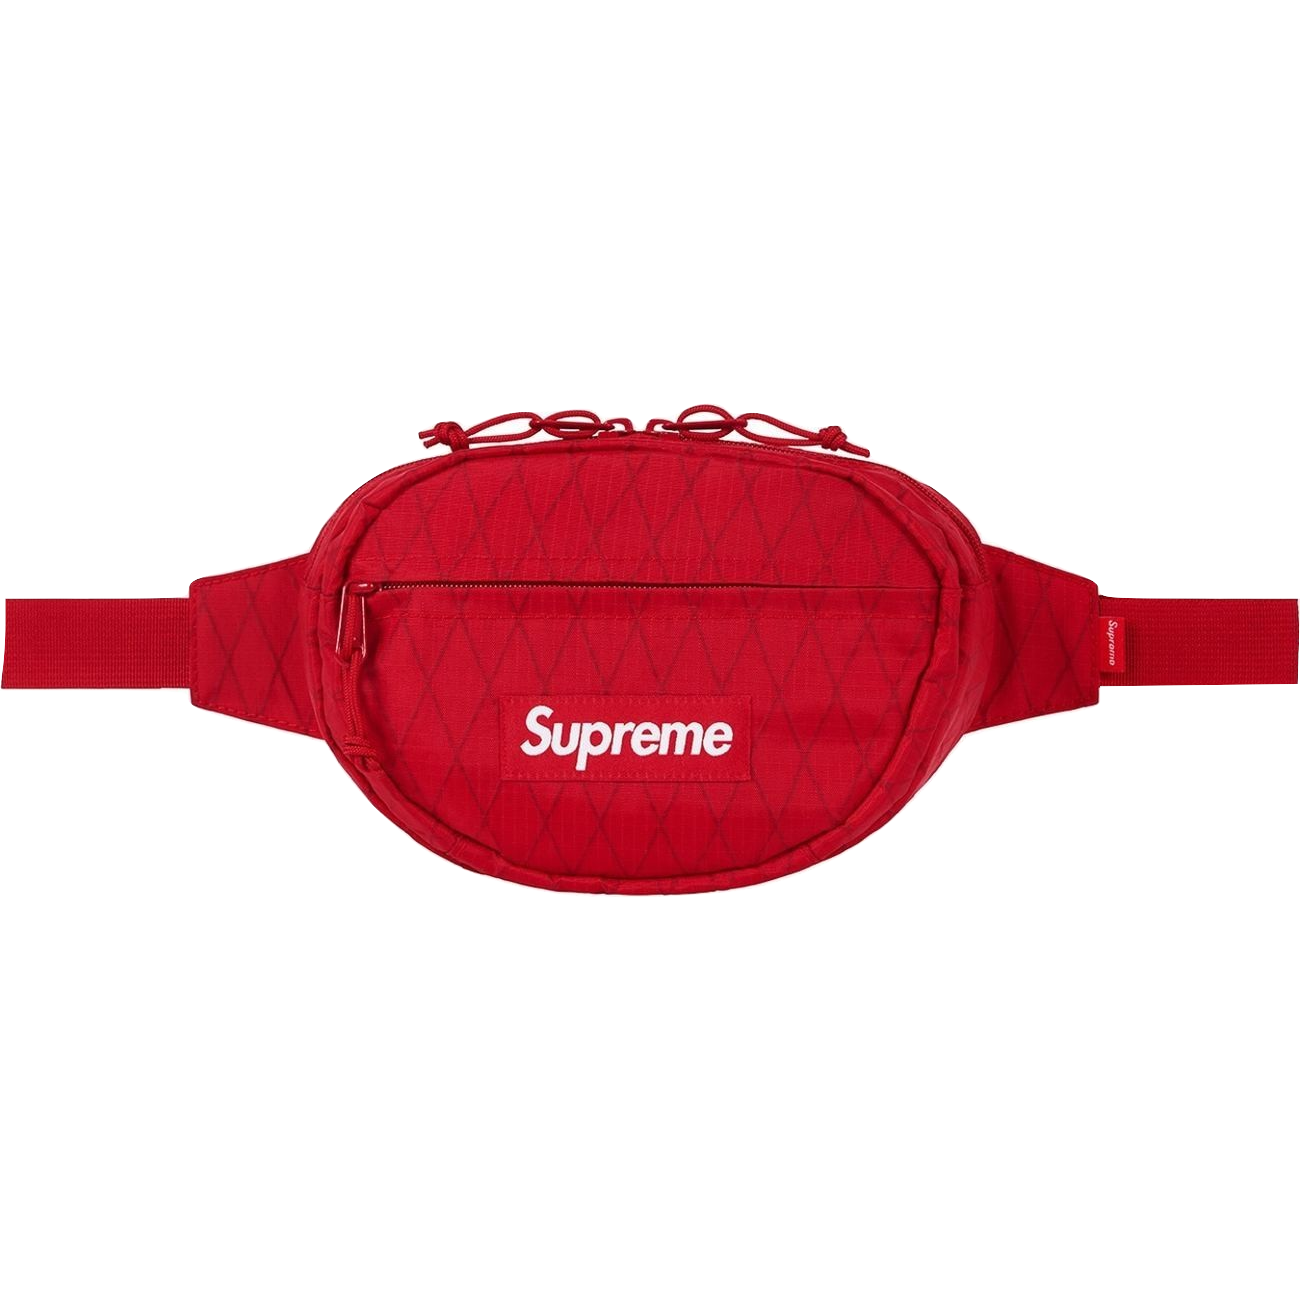 Supreme Waist Bag FW18 - Red - Used